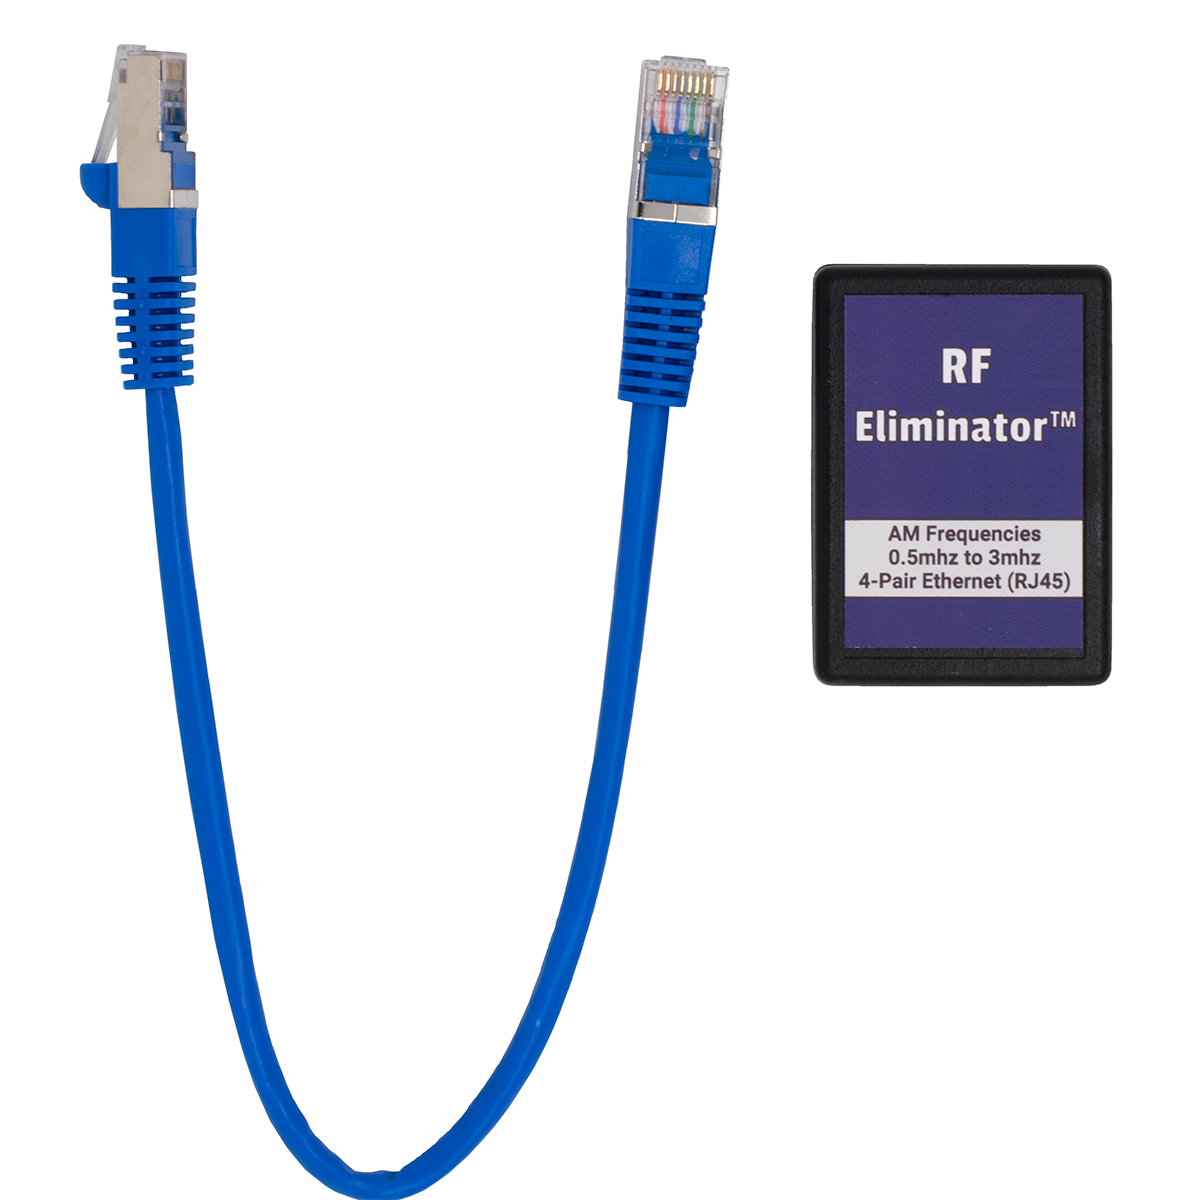 RF Eliminator - 4 Pair Ethernet - AM (Top View)